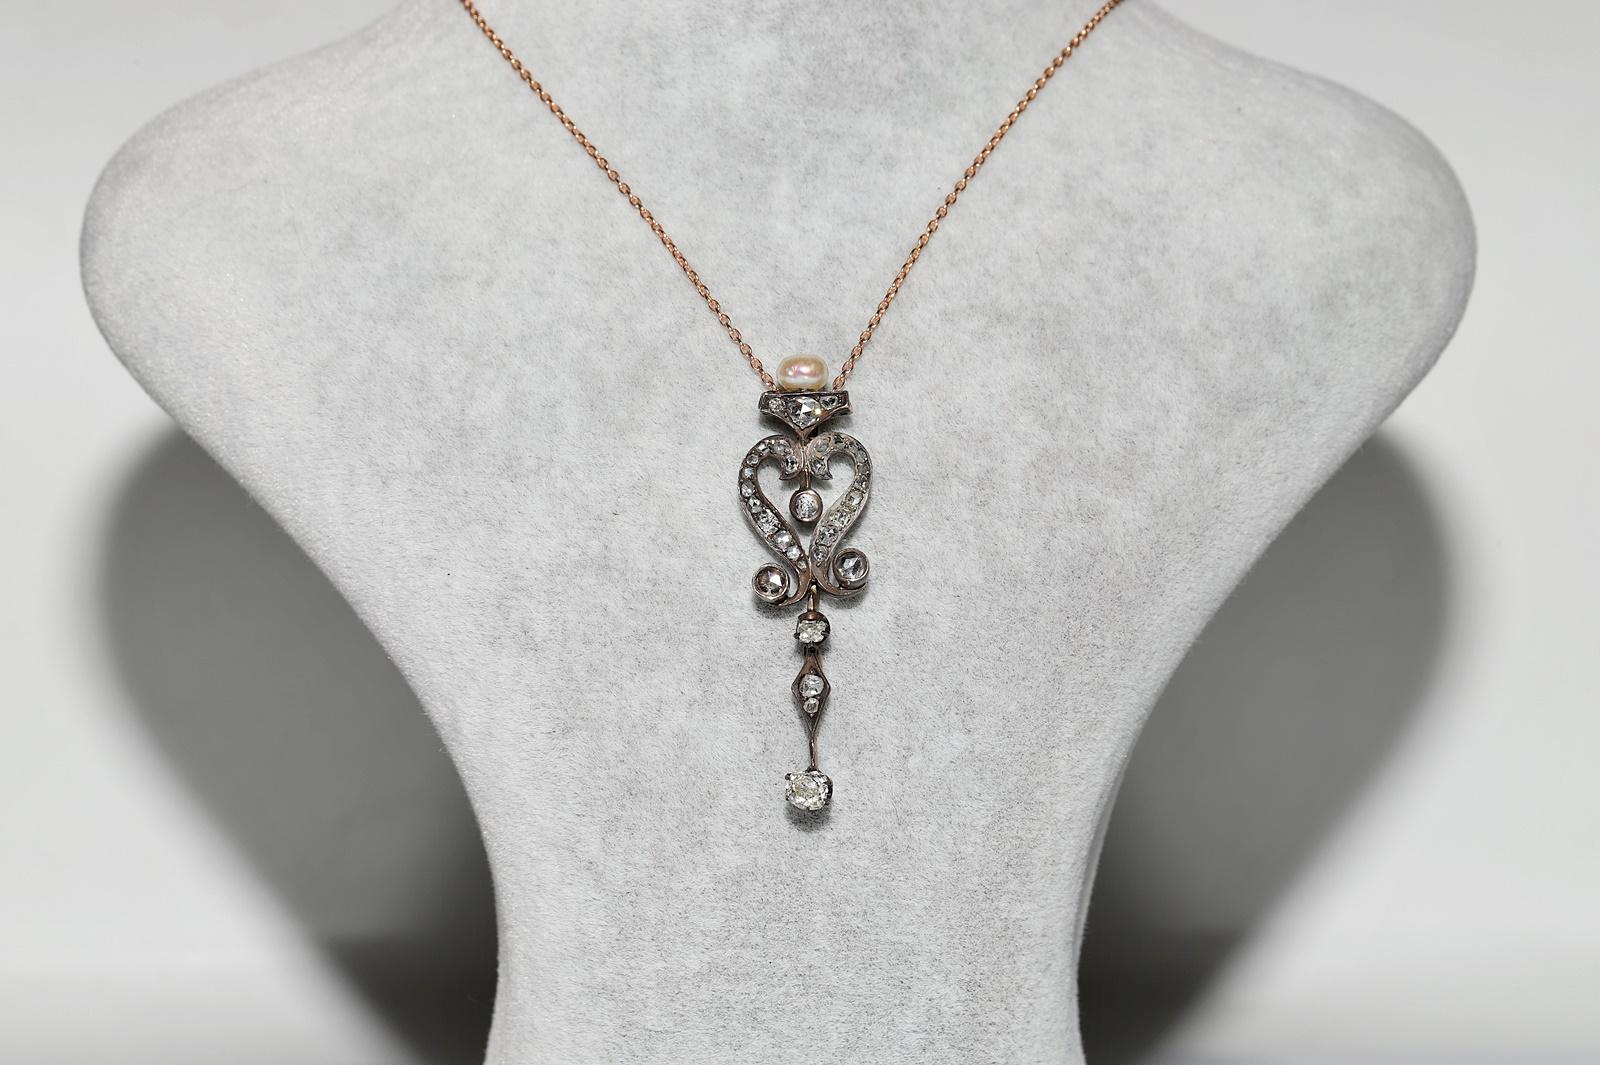 Antique Circa 1900s 8k Gold Top Silver Natural Diamond Pendant Necklace For Sale 3